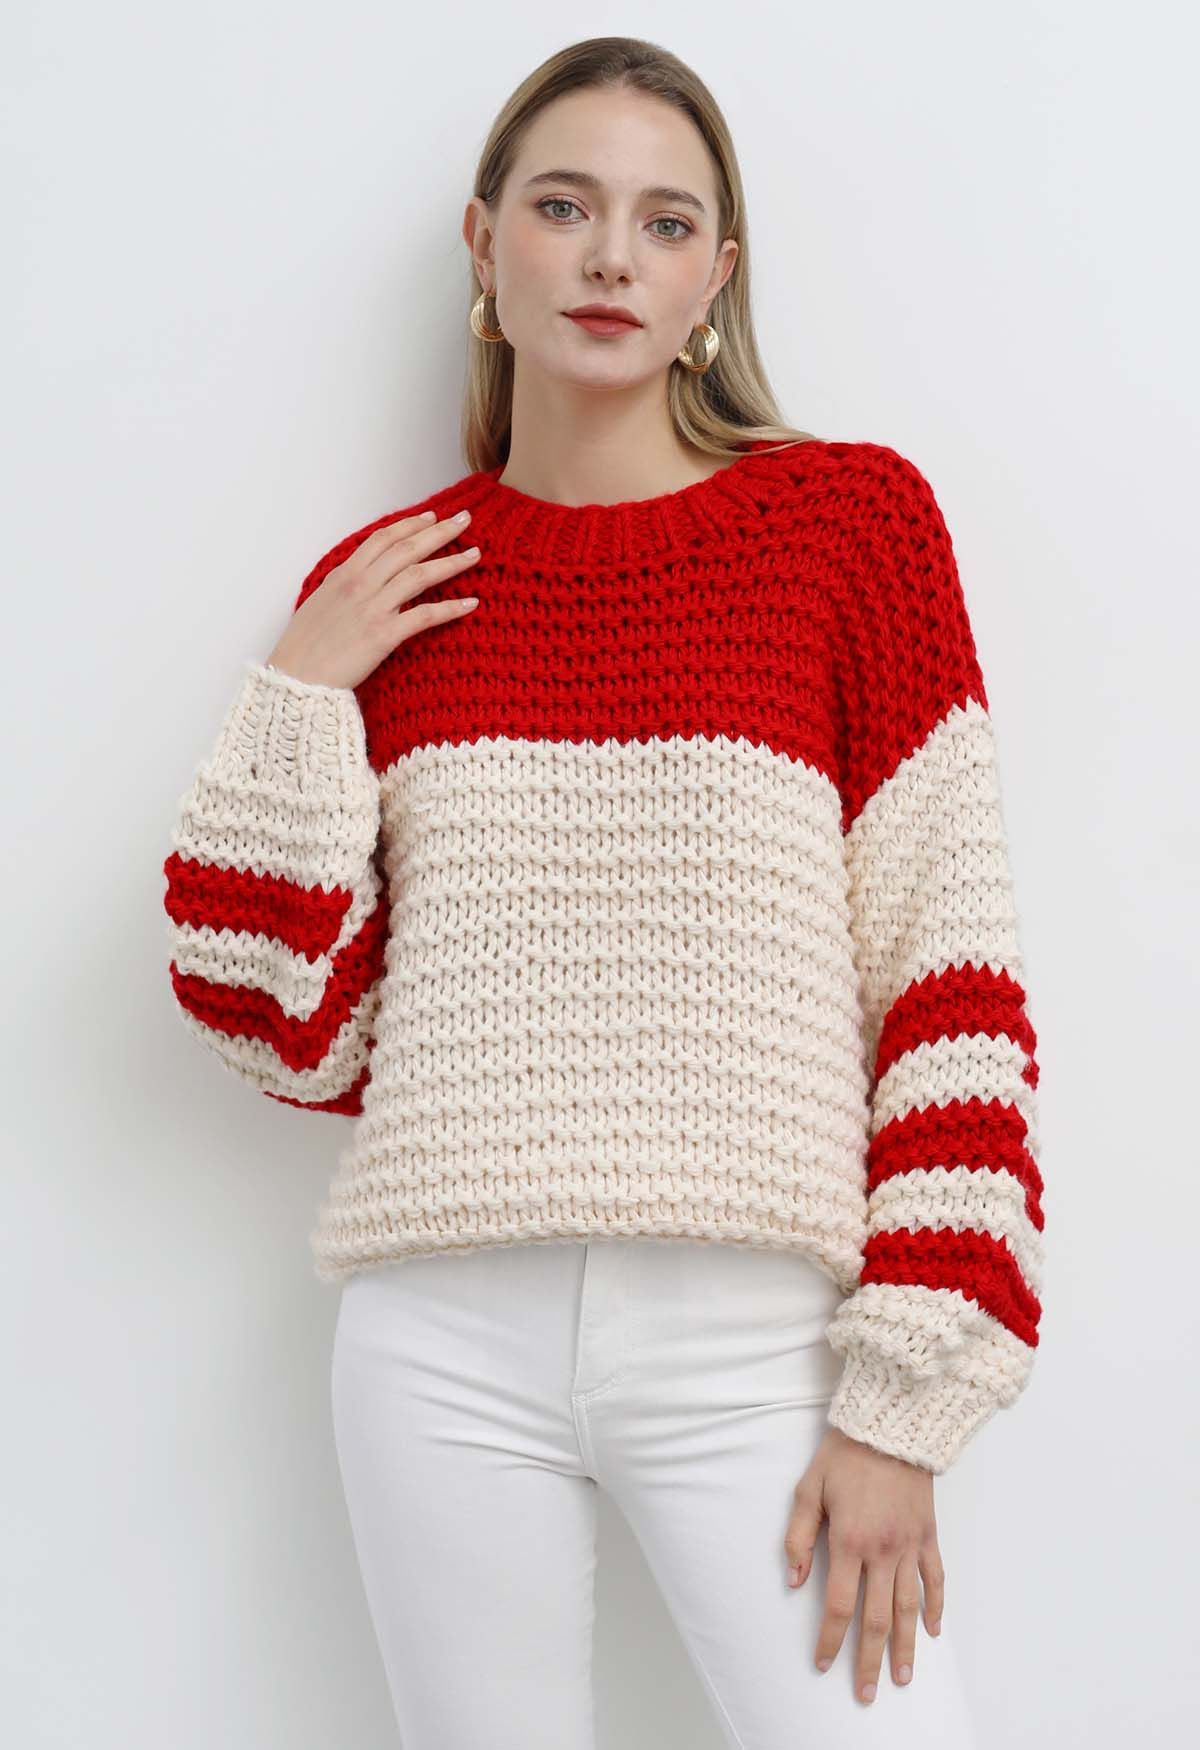 Hand Knitted Merino Sweater. Soft Knit Jumper. Cute Striped